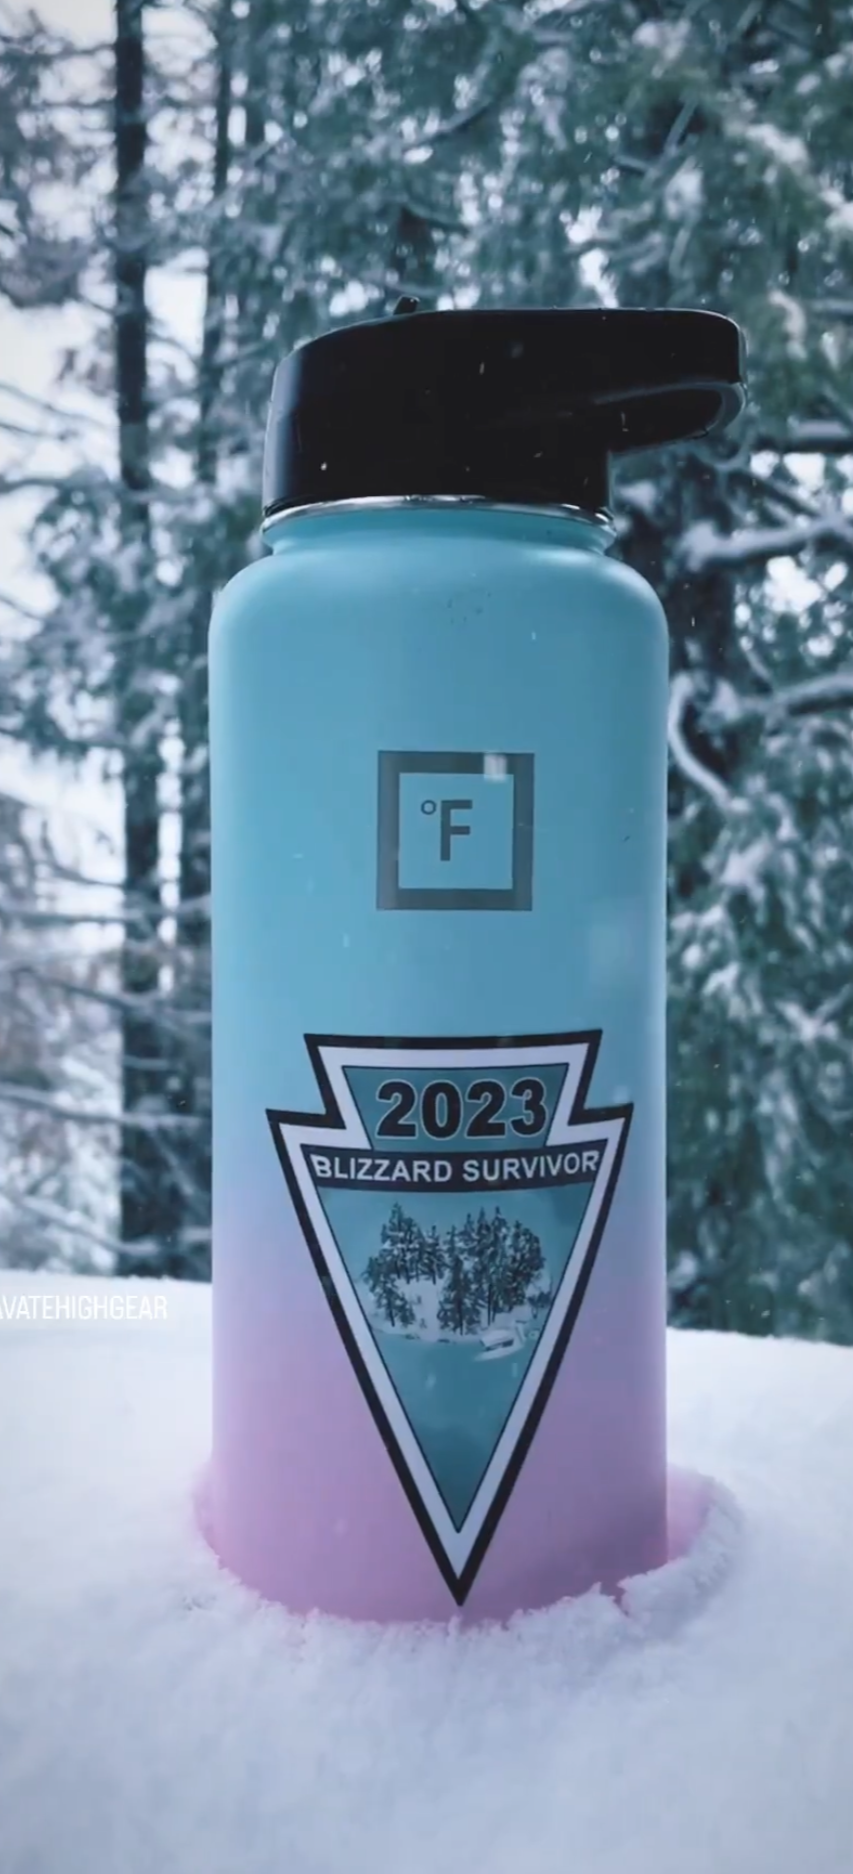 'I SURVIVED' BLIZZARD 2023 STICKER SALE!!!